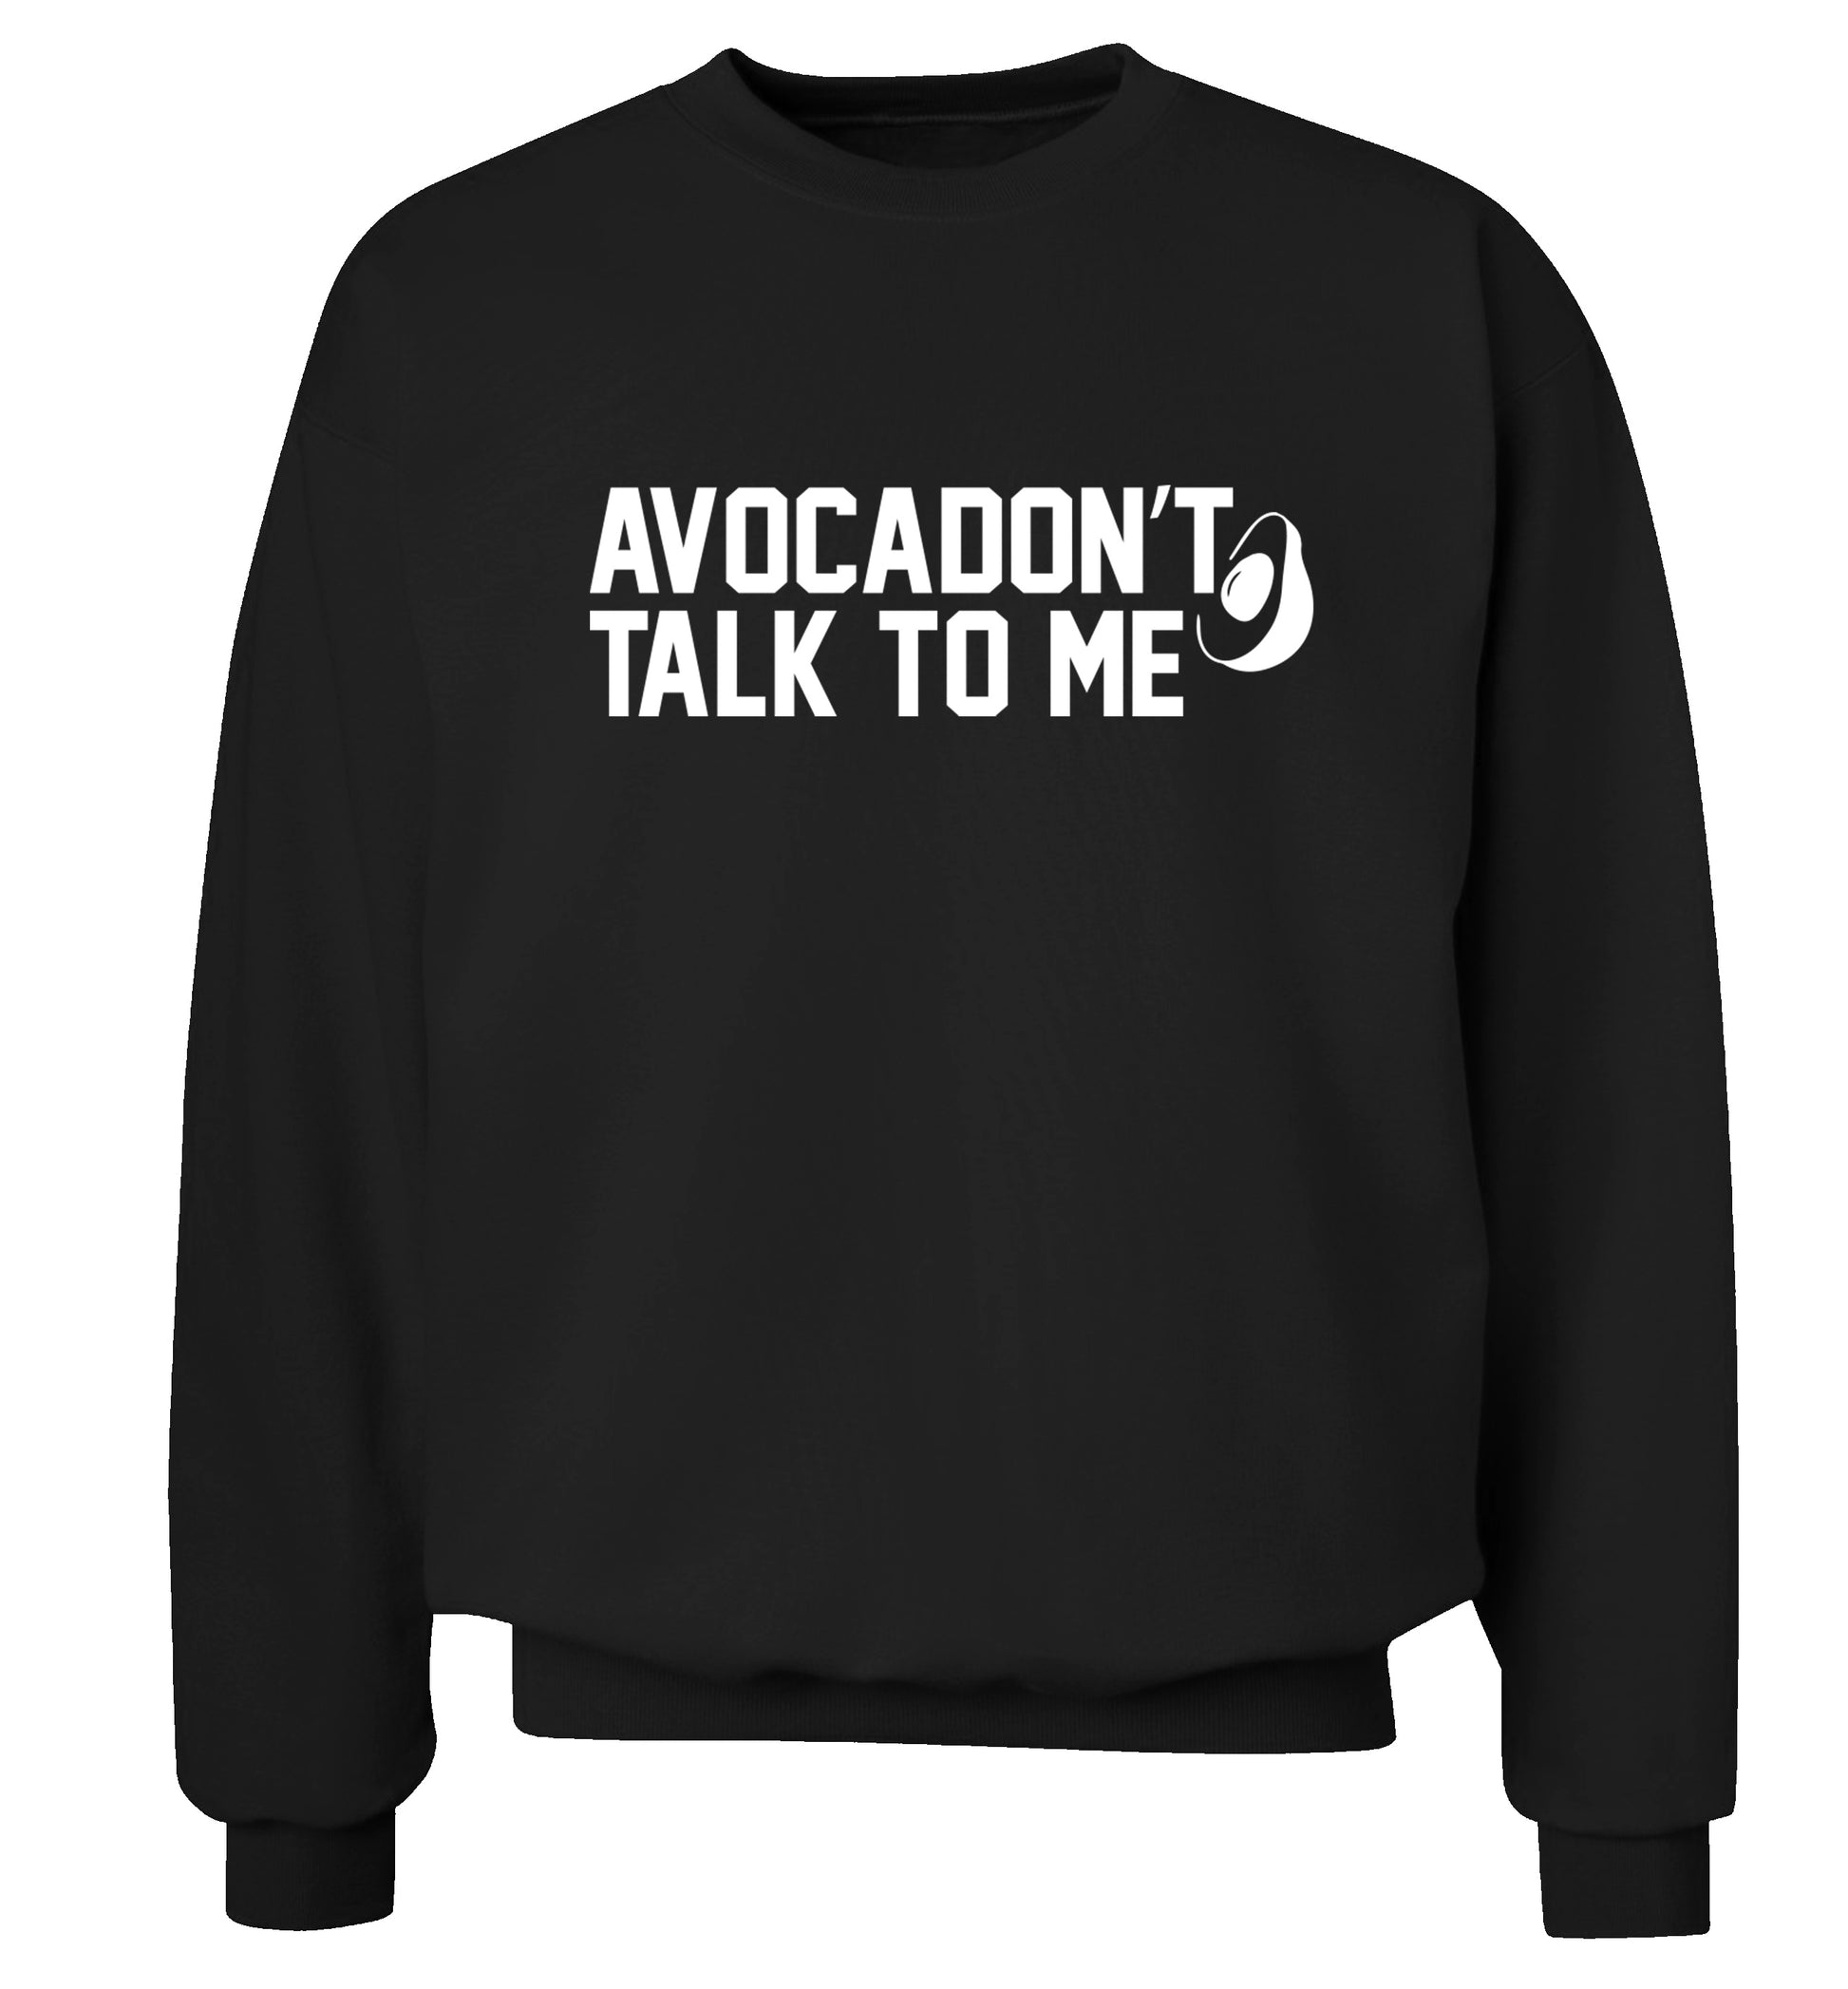 Avocadon't talk to me Adult's unisex black Sweater 2XL